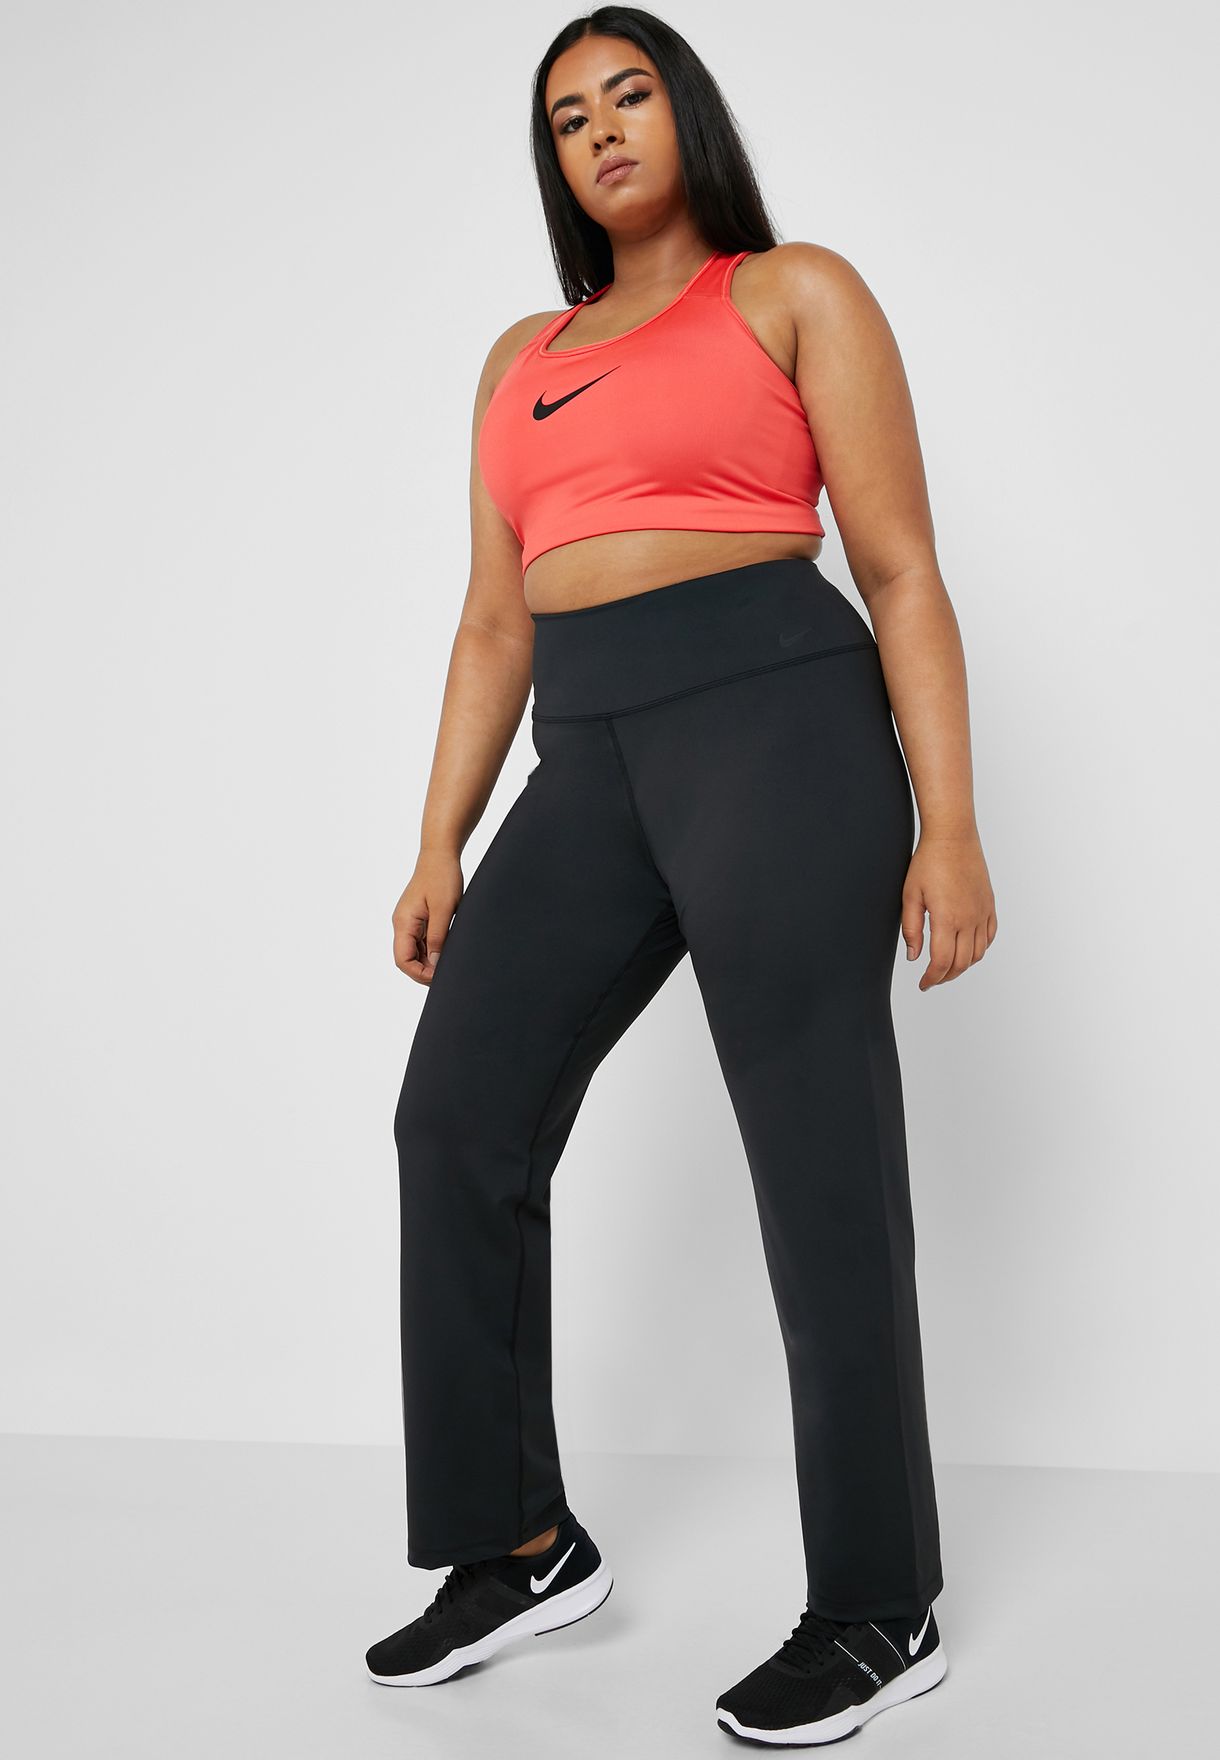 Lío Vigilante Recuperar Buy Nike black Power Classic Gym Sweatpants for Women in MENA, Worldwide